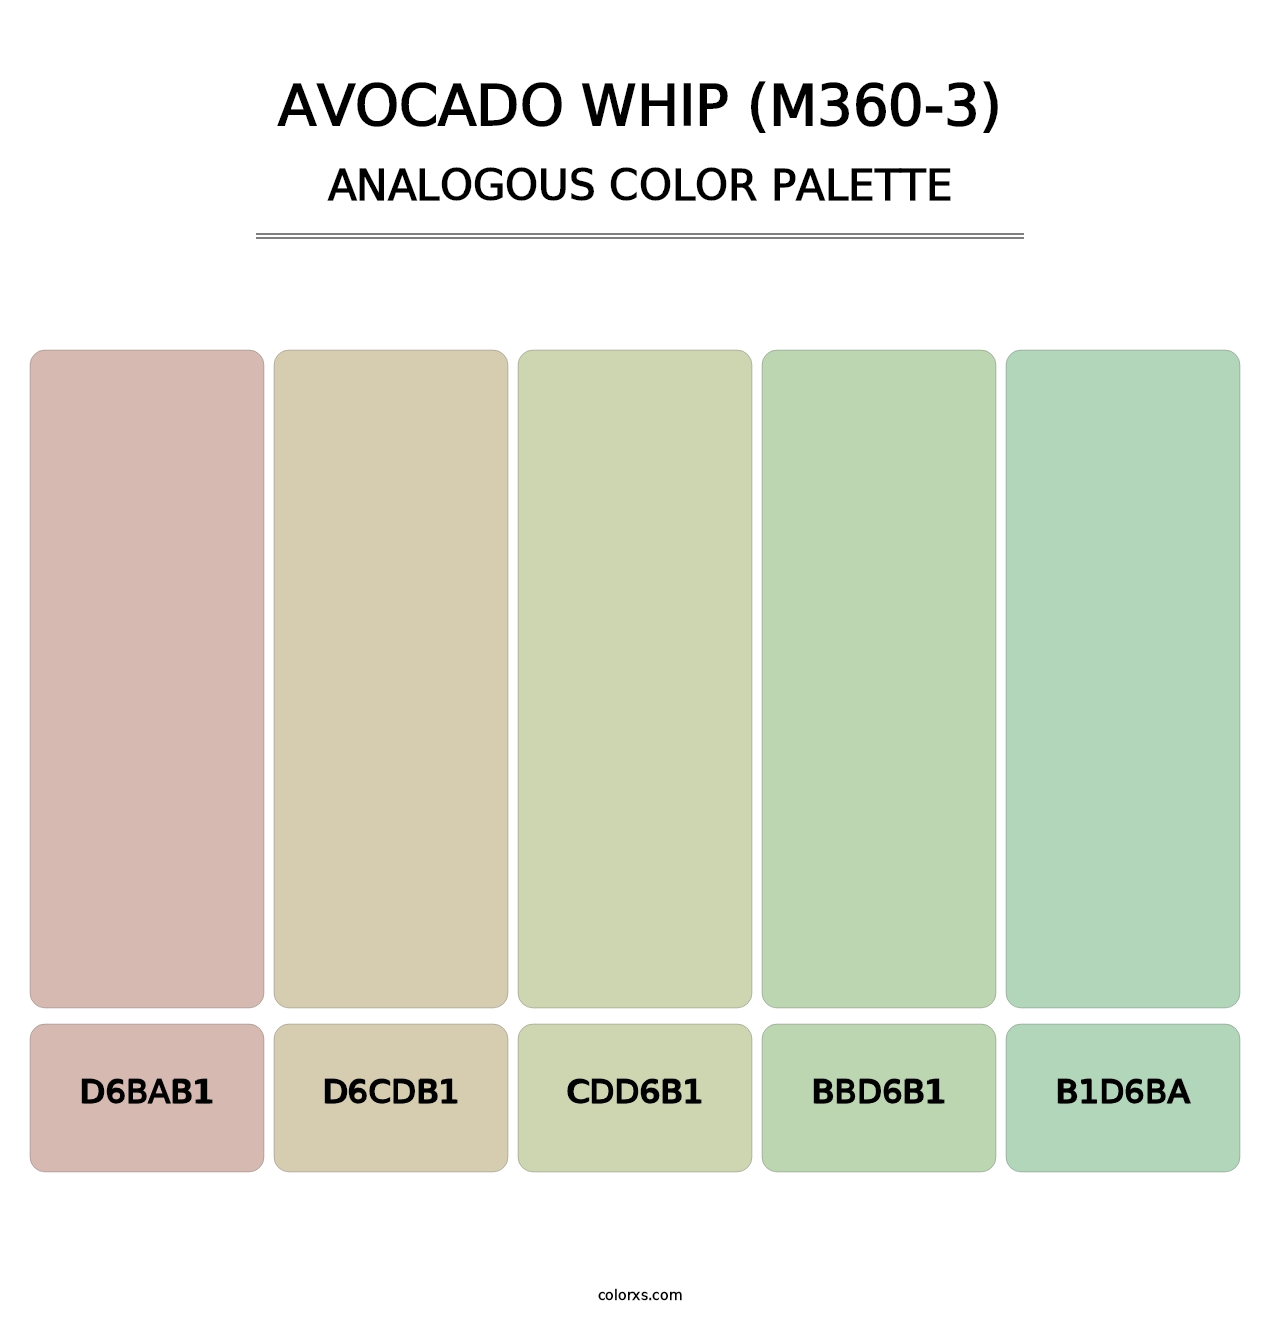 Avocado Whip (M360-3) - Analogous Color Palette